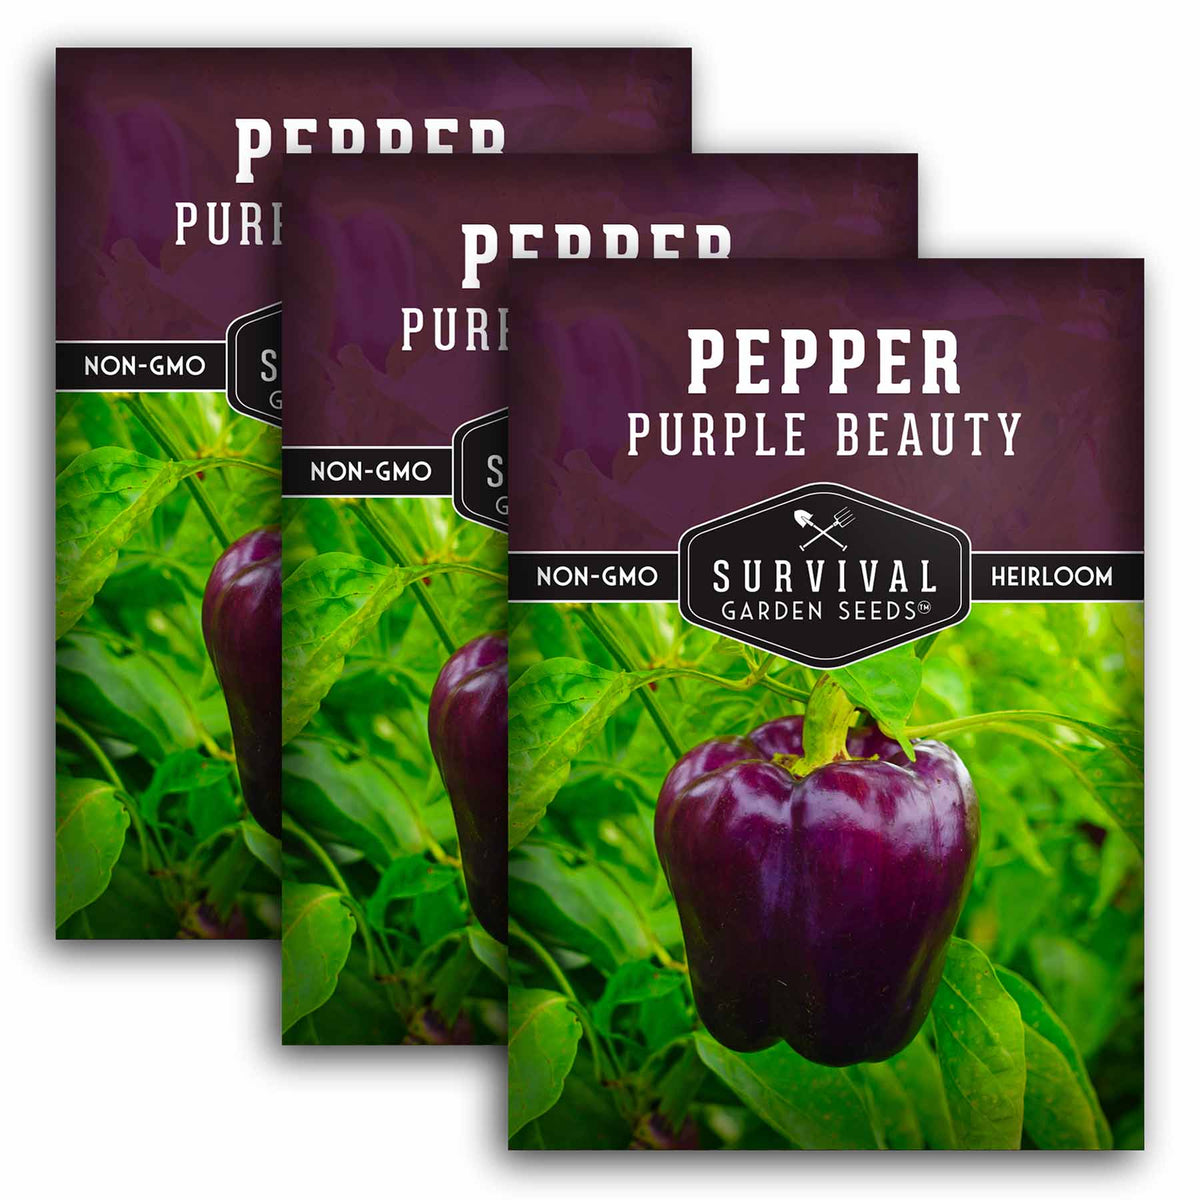 3 packets of Purple Beauty Pepper seeds